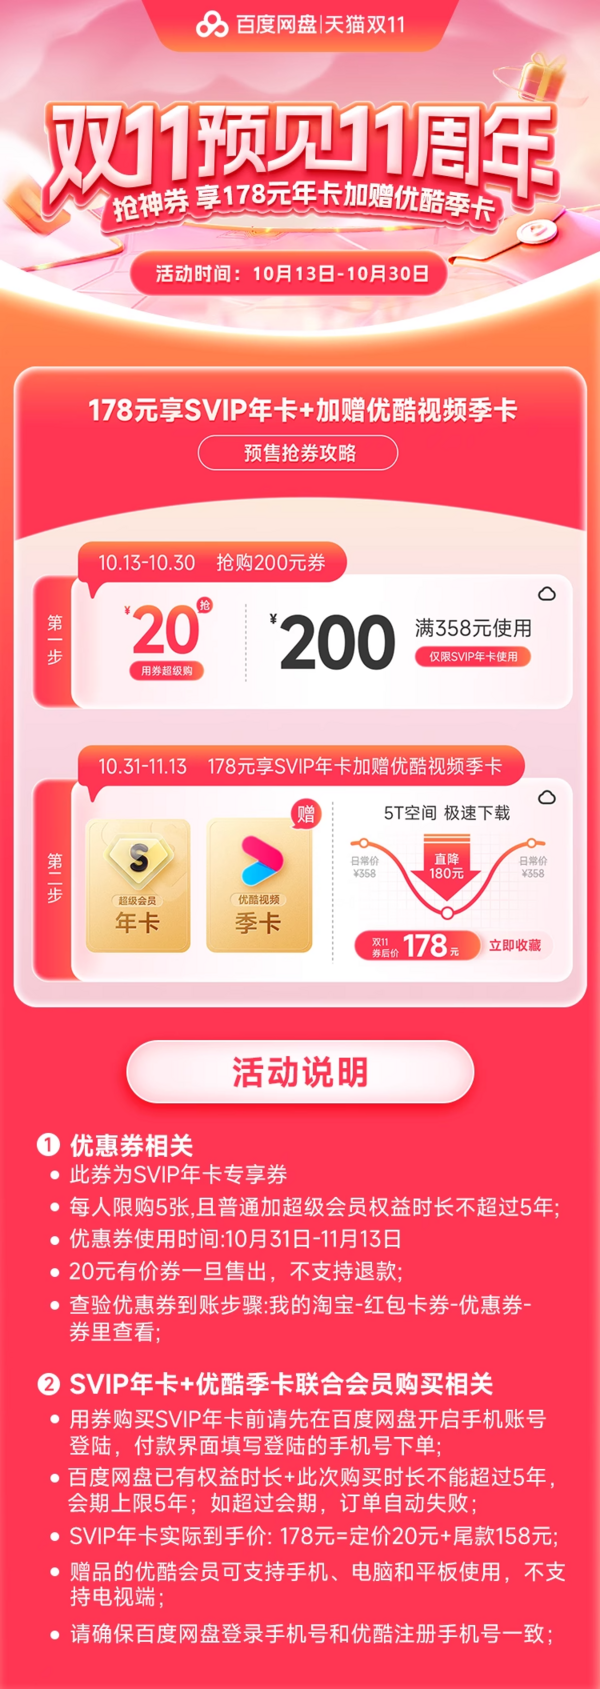 Baidu 百度 網盤 超級會員年卡 SVIP + 優酷視頻季卡